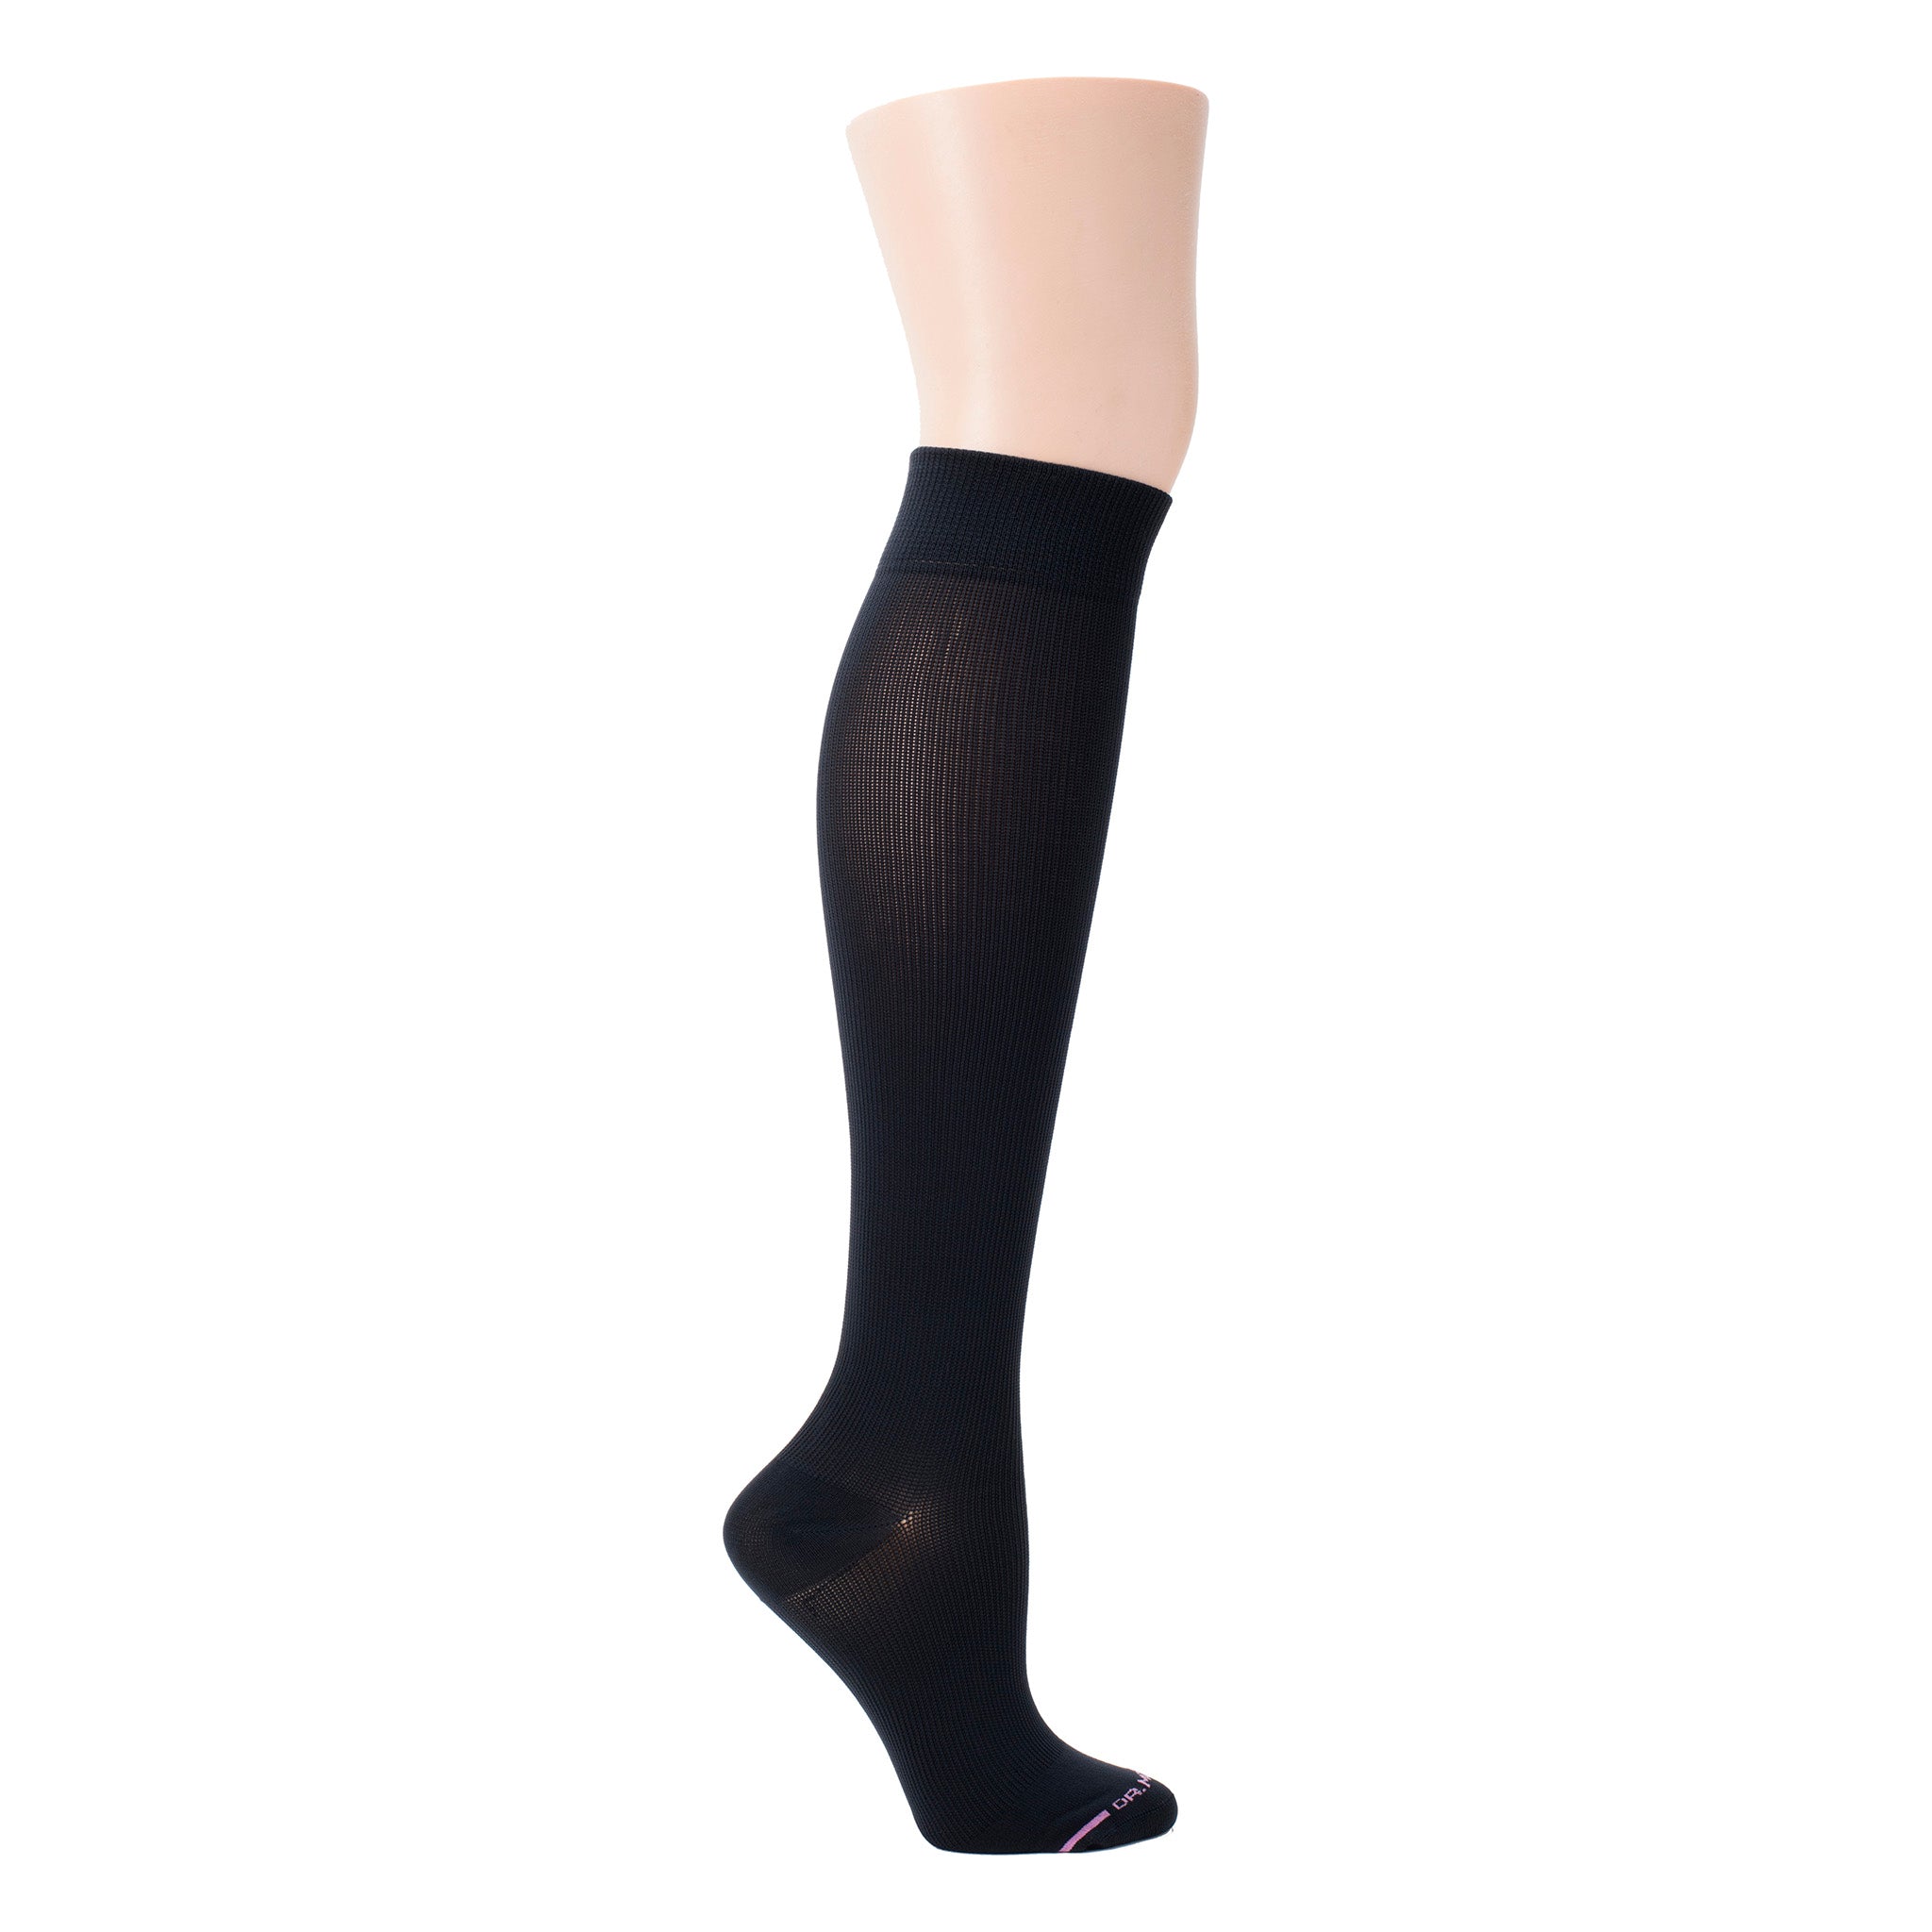 Solid Microfiber Nylon | Knee-High Compression Socks For Women